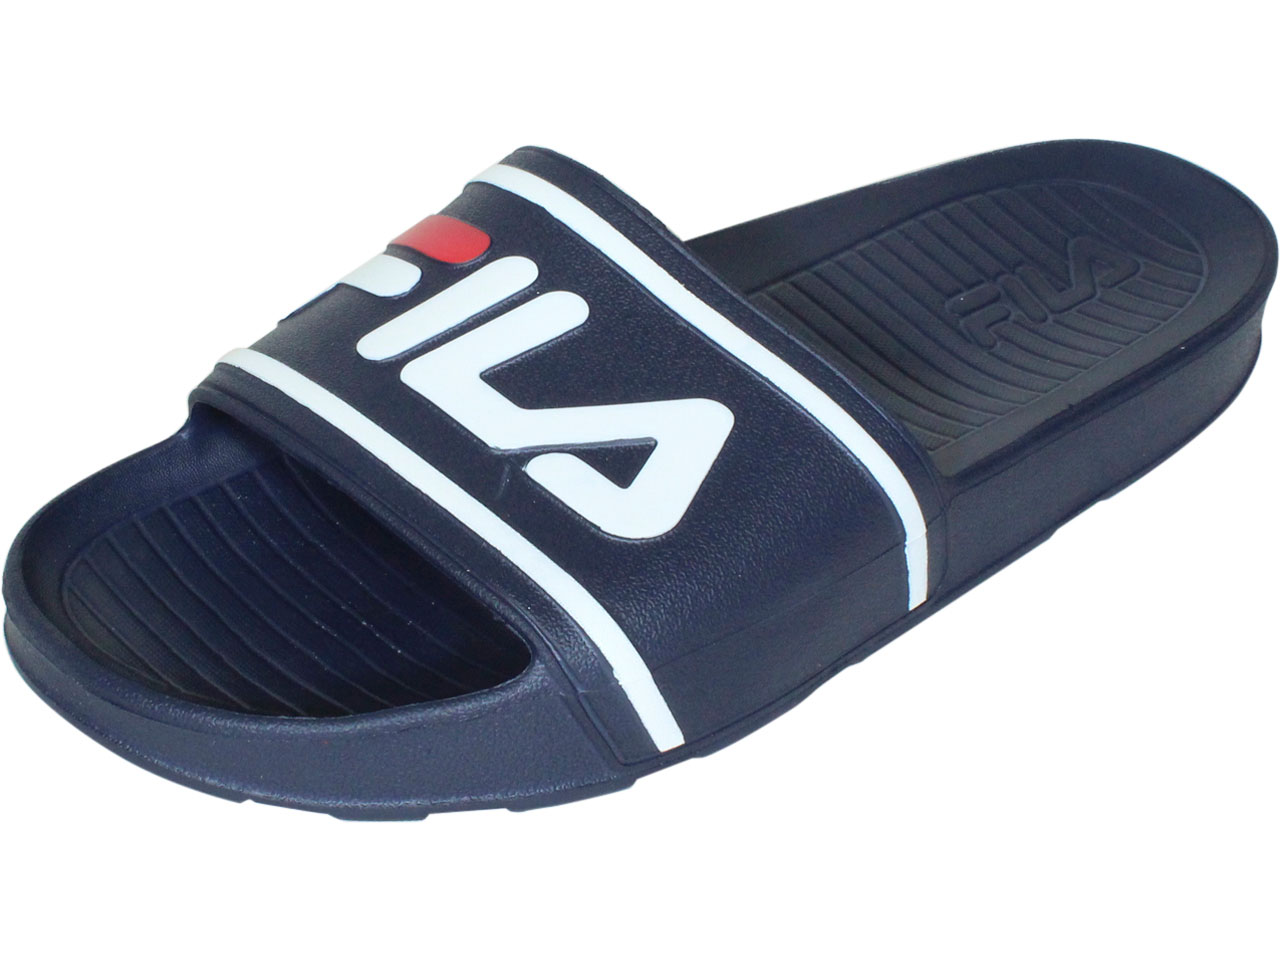 Fila Sleek-Slide-ST Slides Fila Navy/White/Fila Men's Sandals Shoes 12 | JoyLot.com